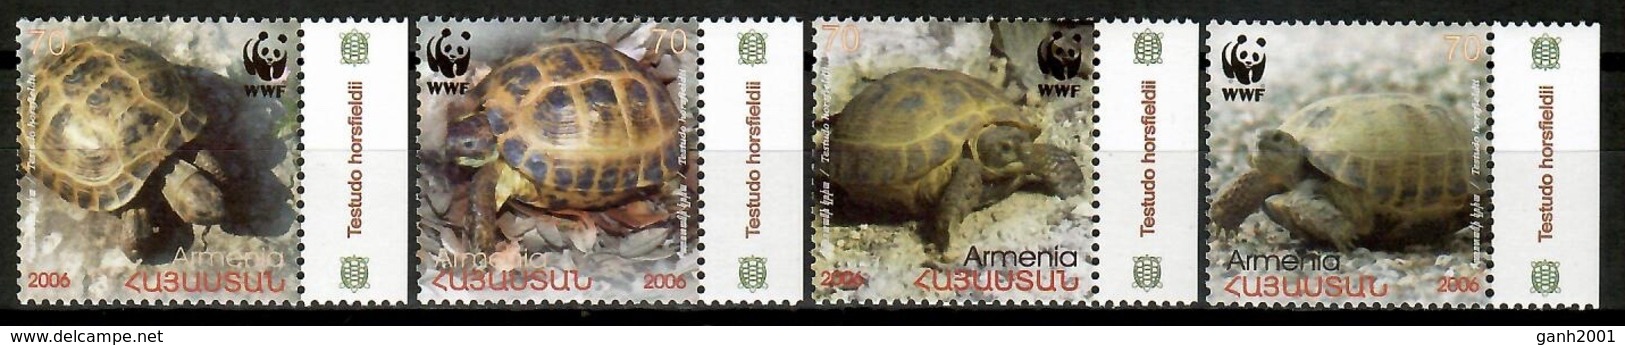 Armenia 2006 / Reptiles Turtles WWF MNH Tortugas Schildkröten / Cu13928  5-25 - Tortugas